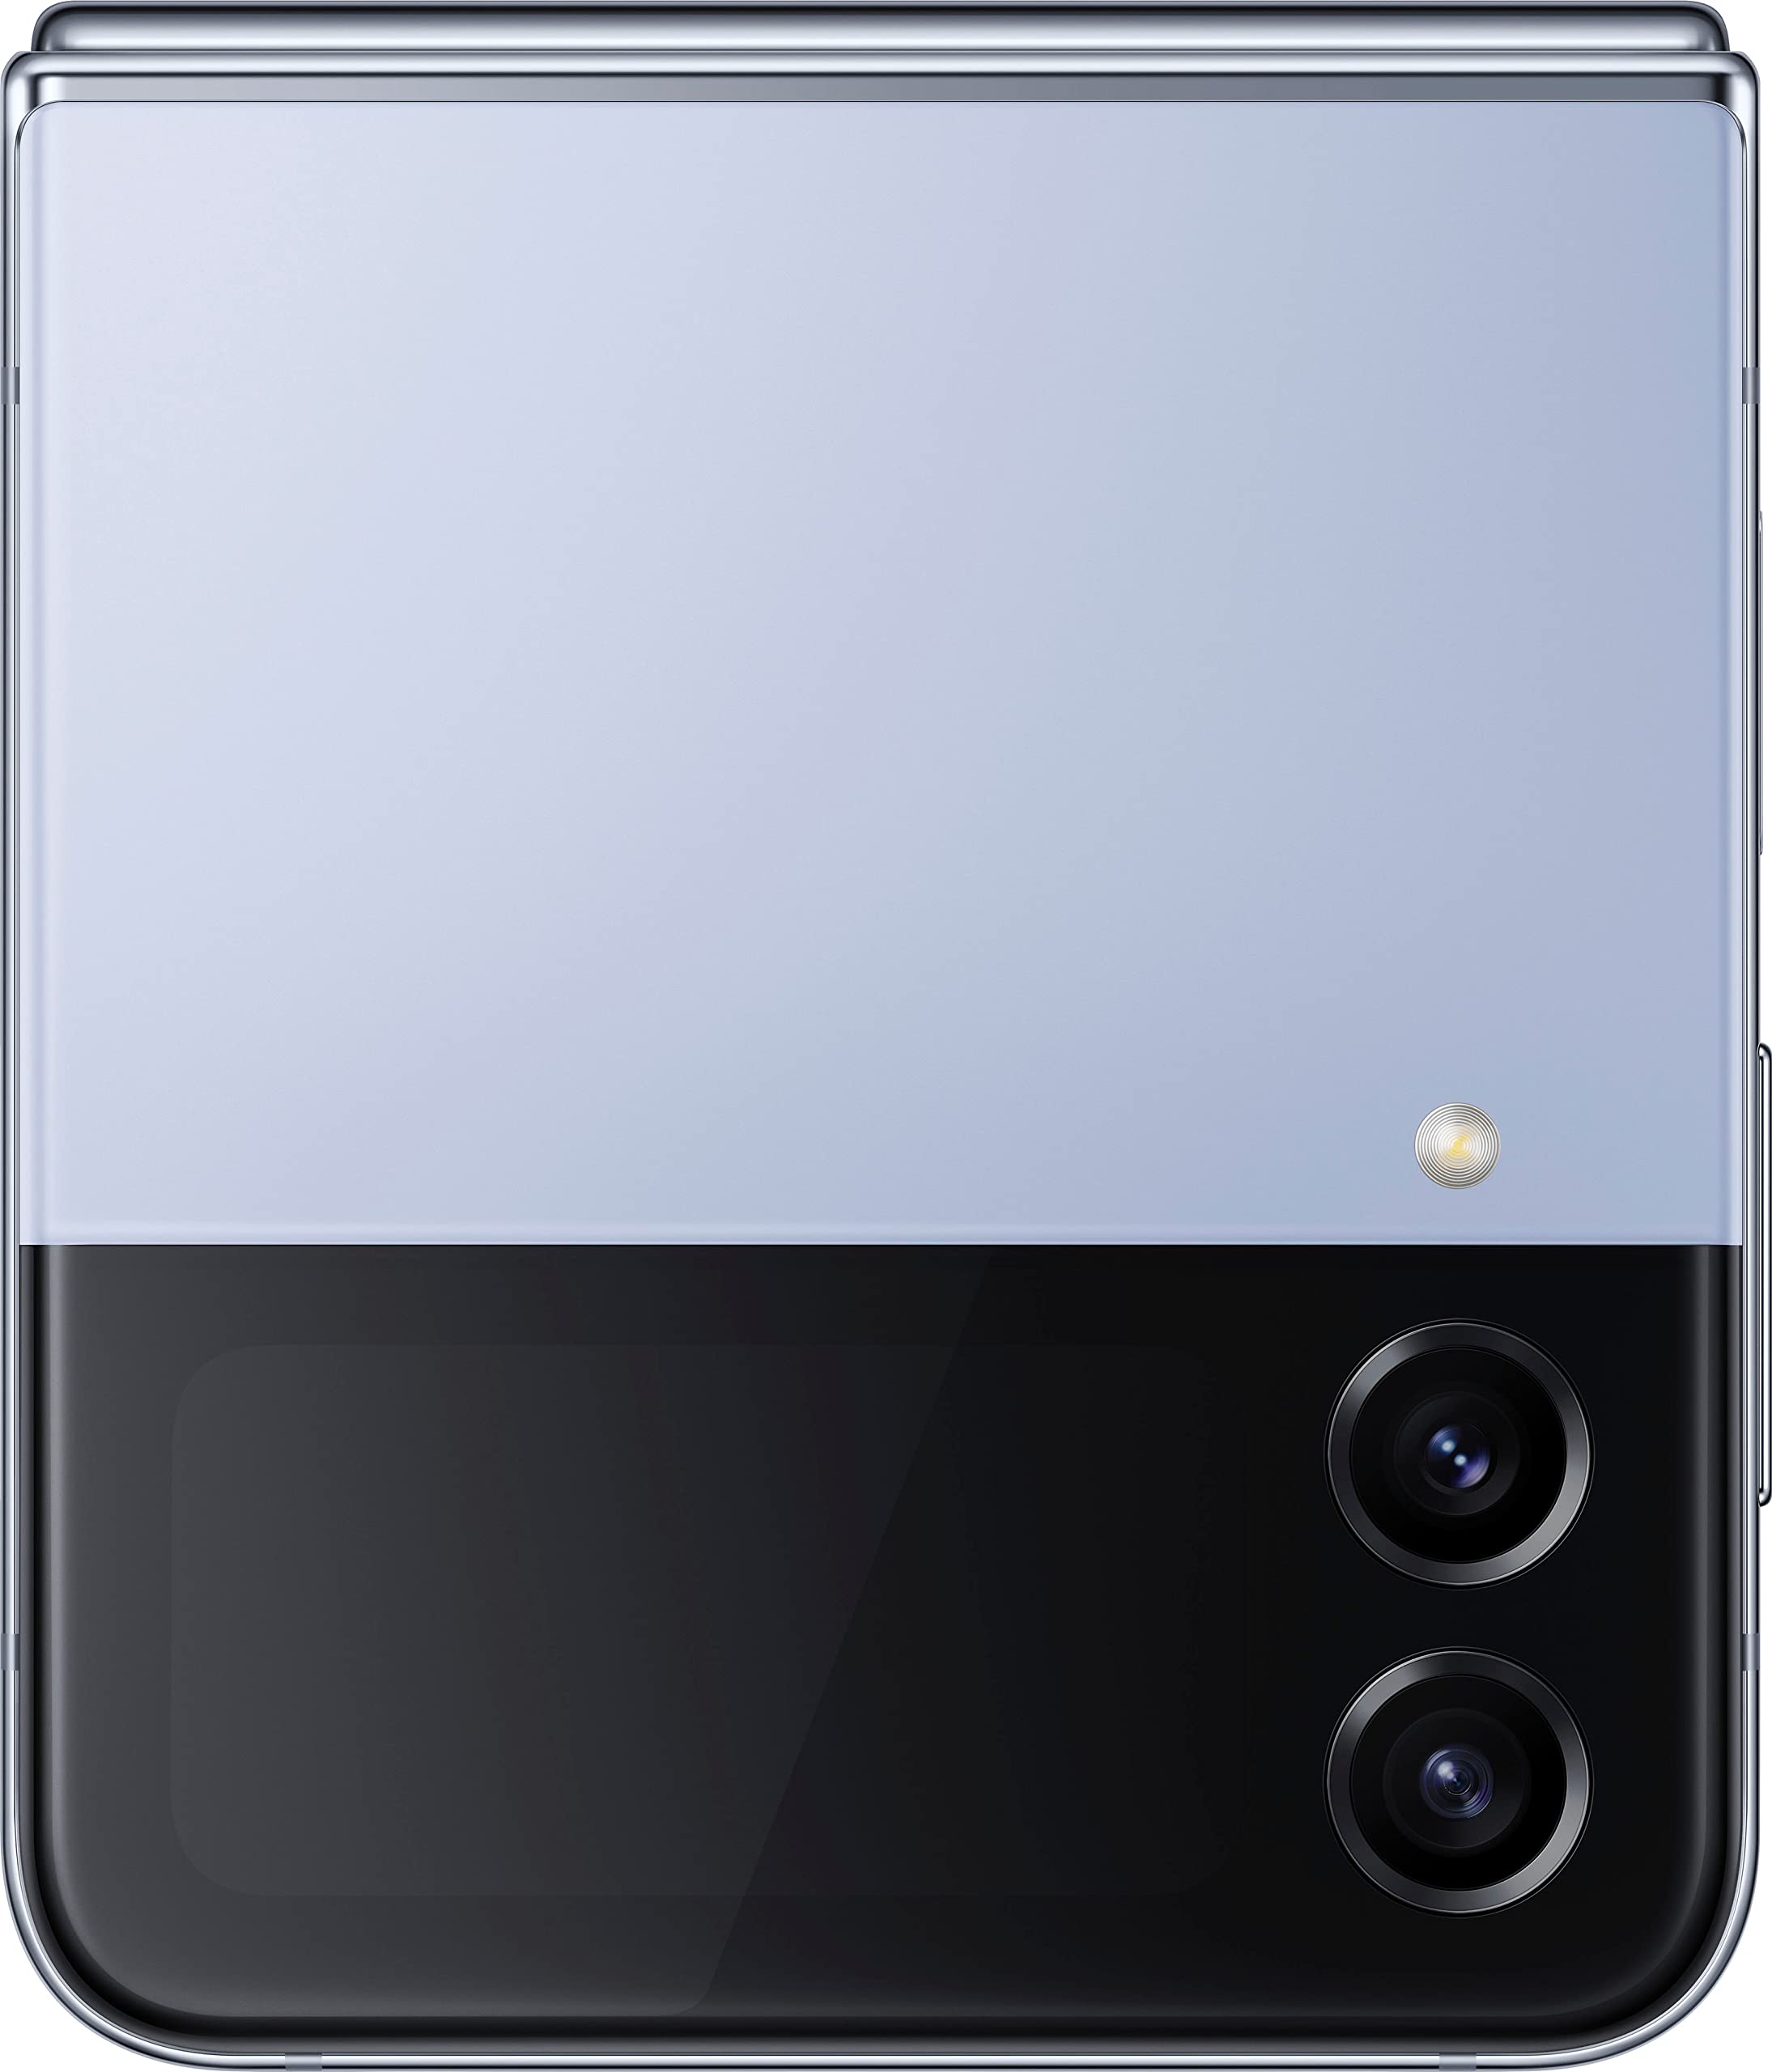 SAMSUNG Galaxy Z Flip4 5G 256GB 8GB RAM Factory Unlocked (GSM Only | No CDMA - not Compatible with Verizon/Sprint) - Blue (Renewed)